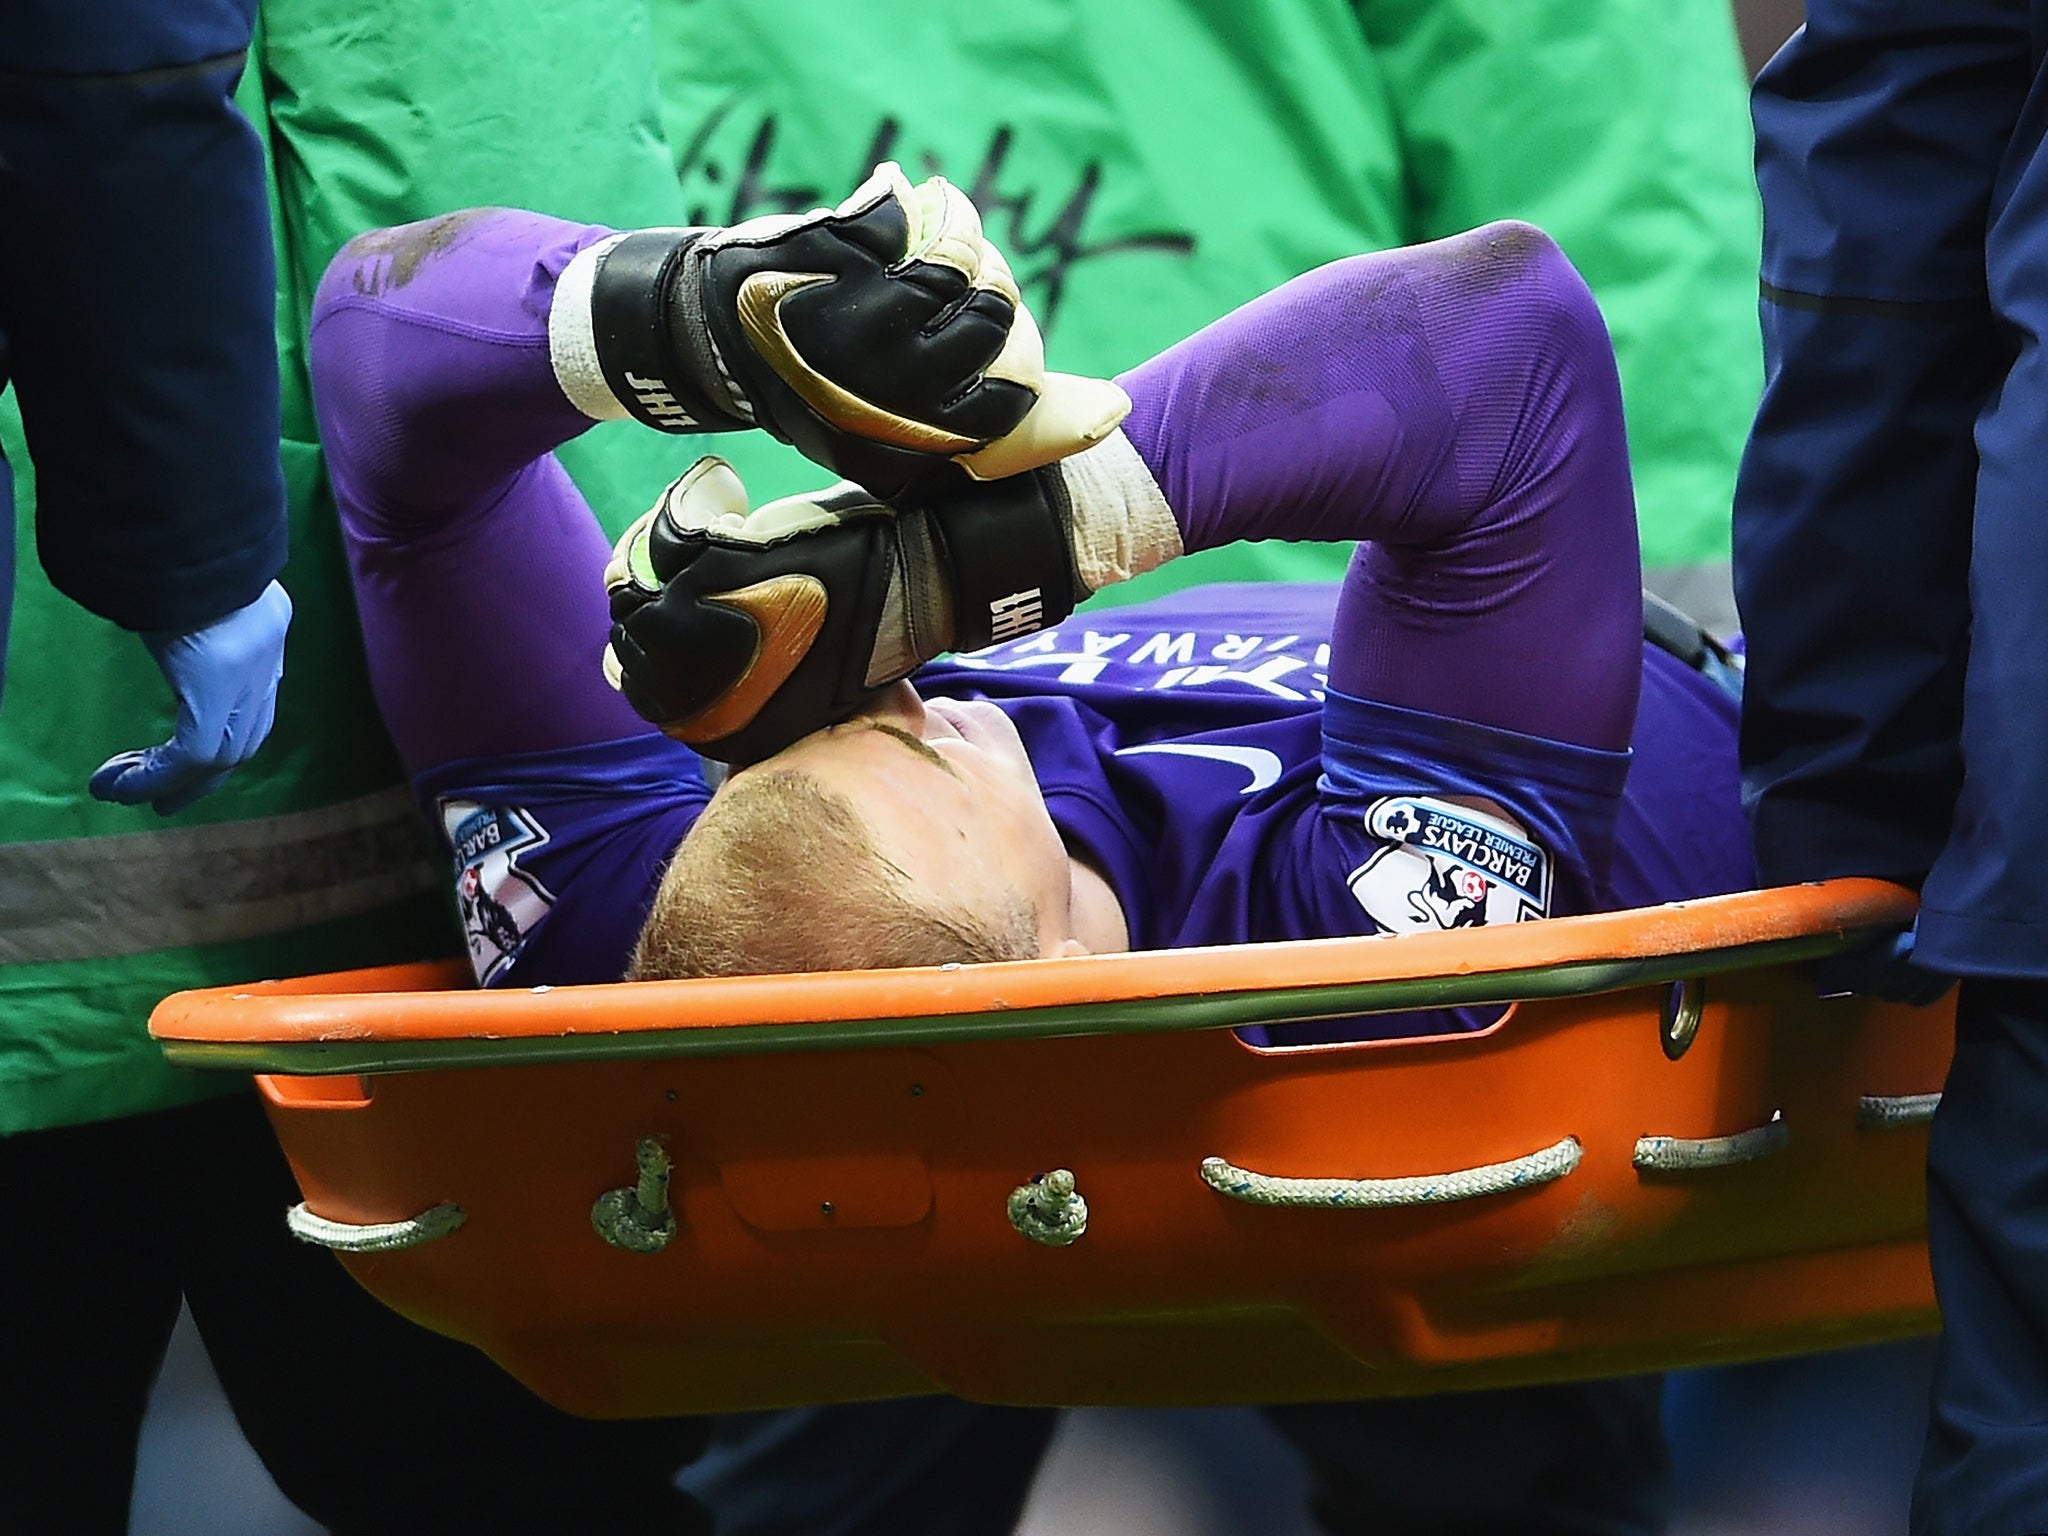 Manchester City goalkeeper Joe Hart was stretchered off following his calf injury